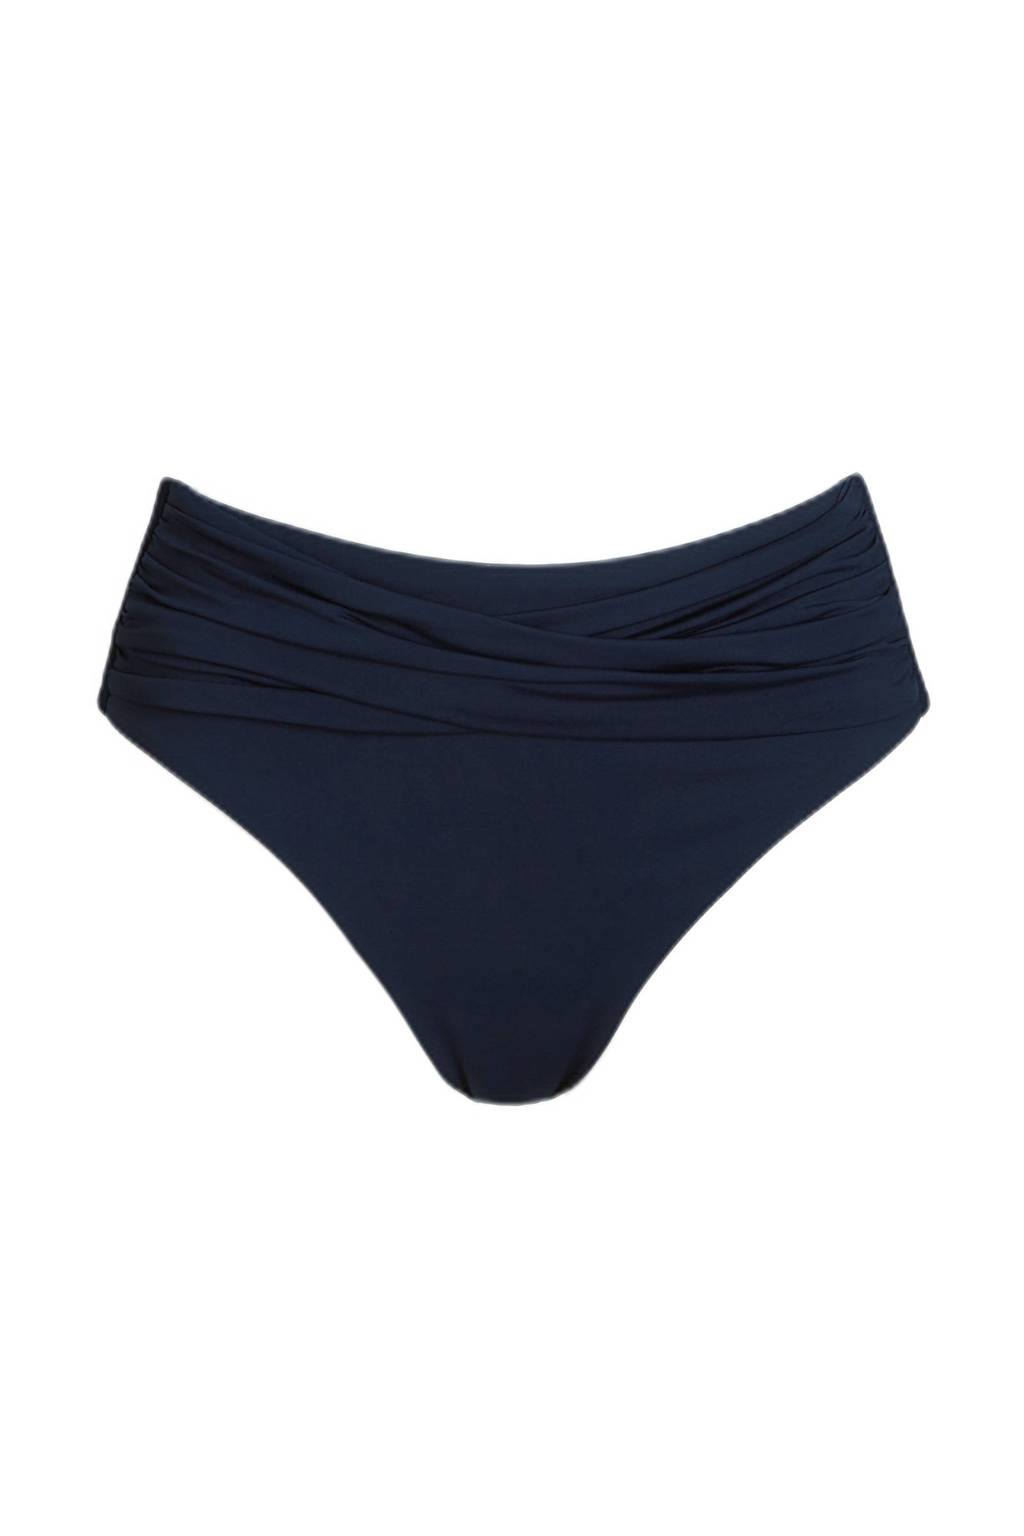 meisje wol Alstublieft Seafolly S>COLLECTIVE high waist bikini slip (441) – Lingerie Badmode